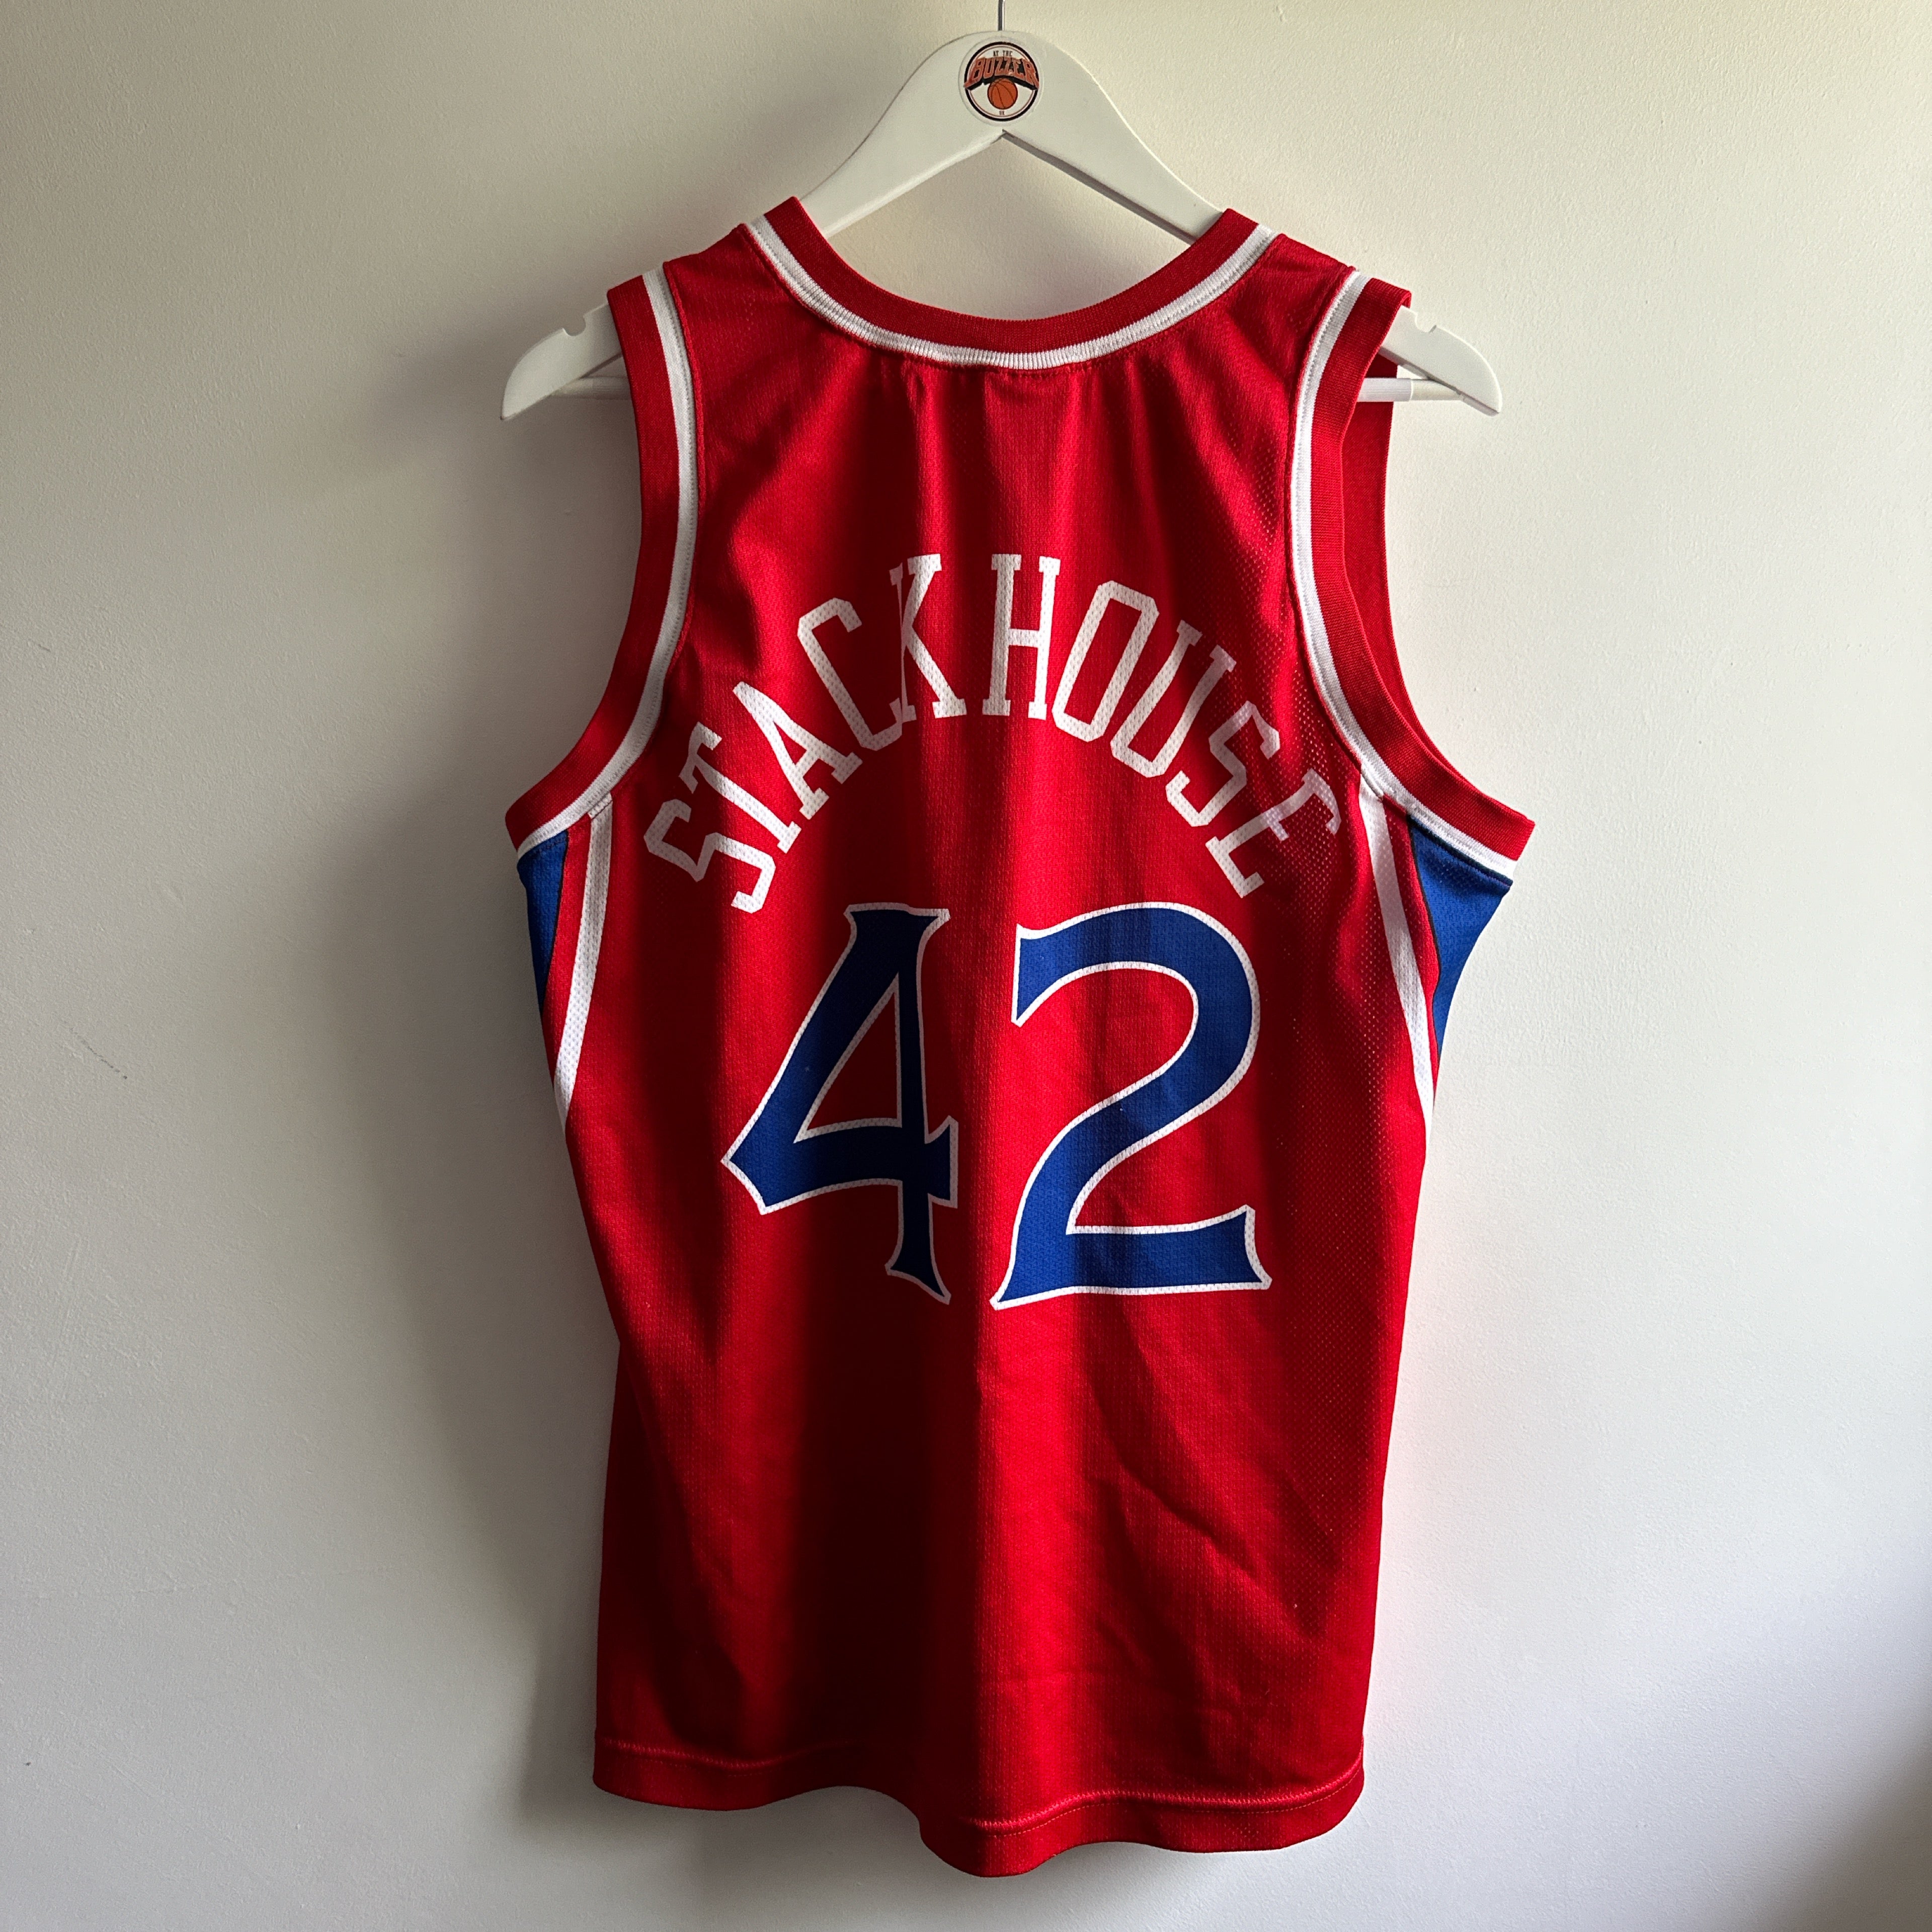 Philadelphia 76ers Jerry Stackhouse Champion jersey - Medium